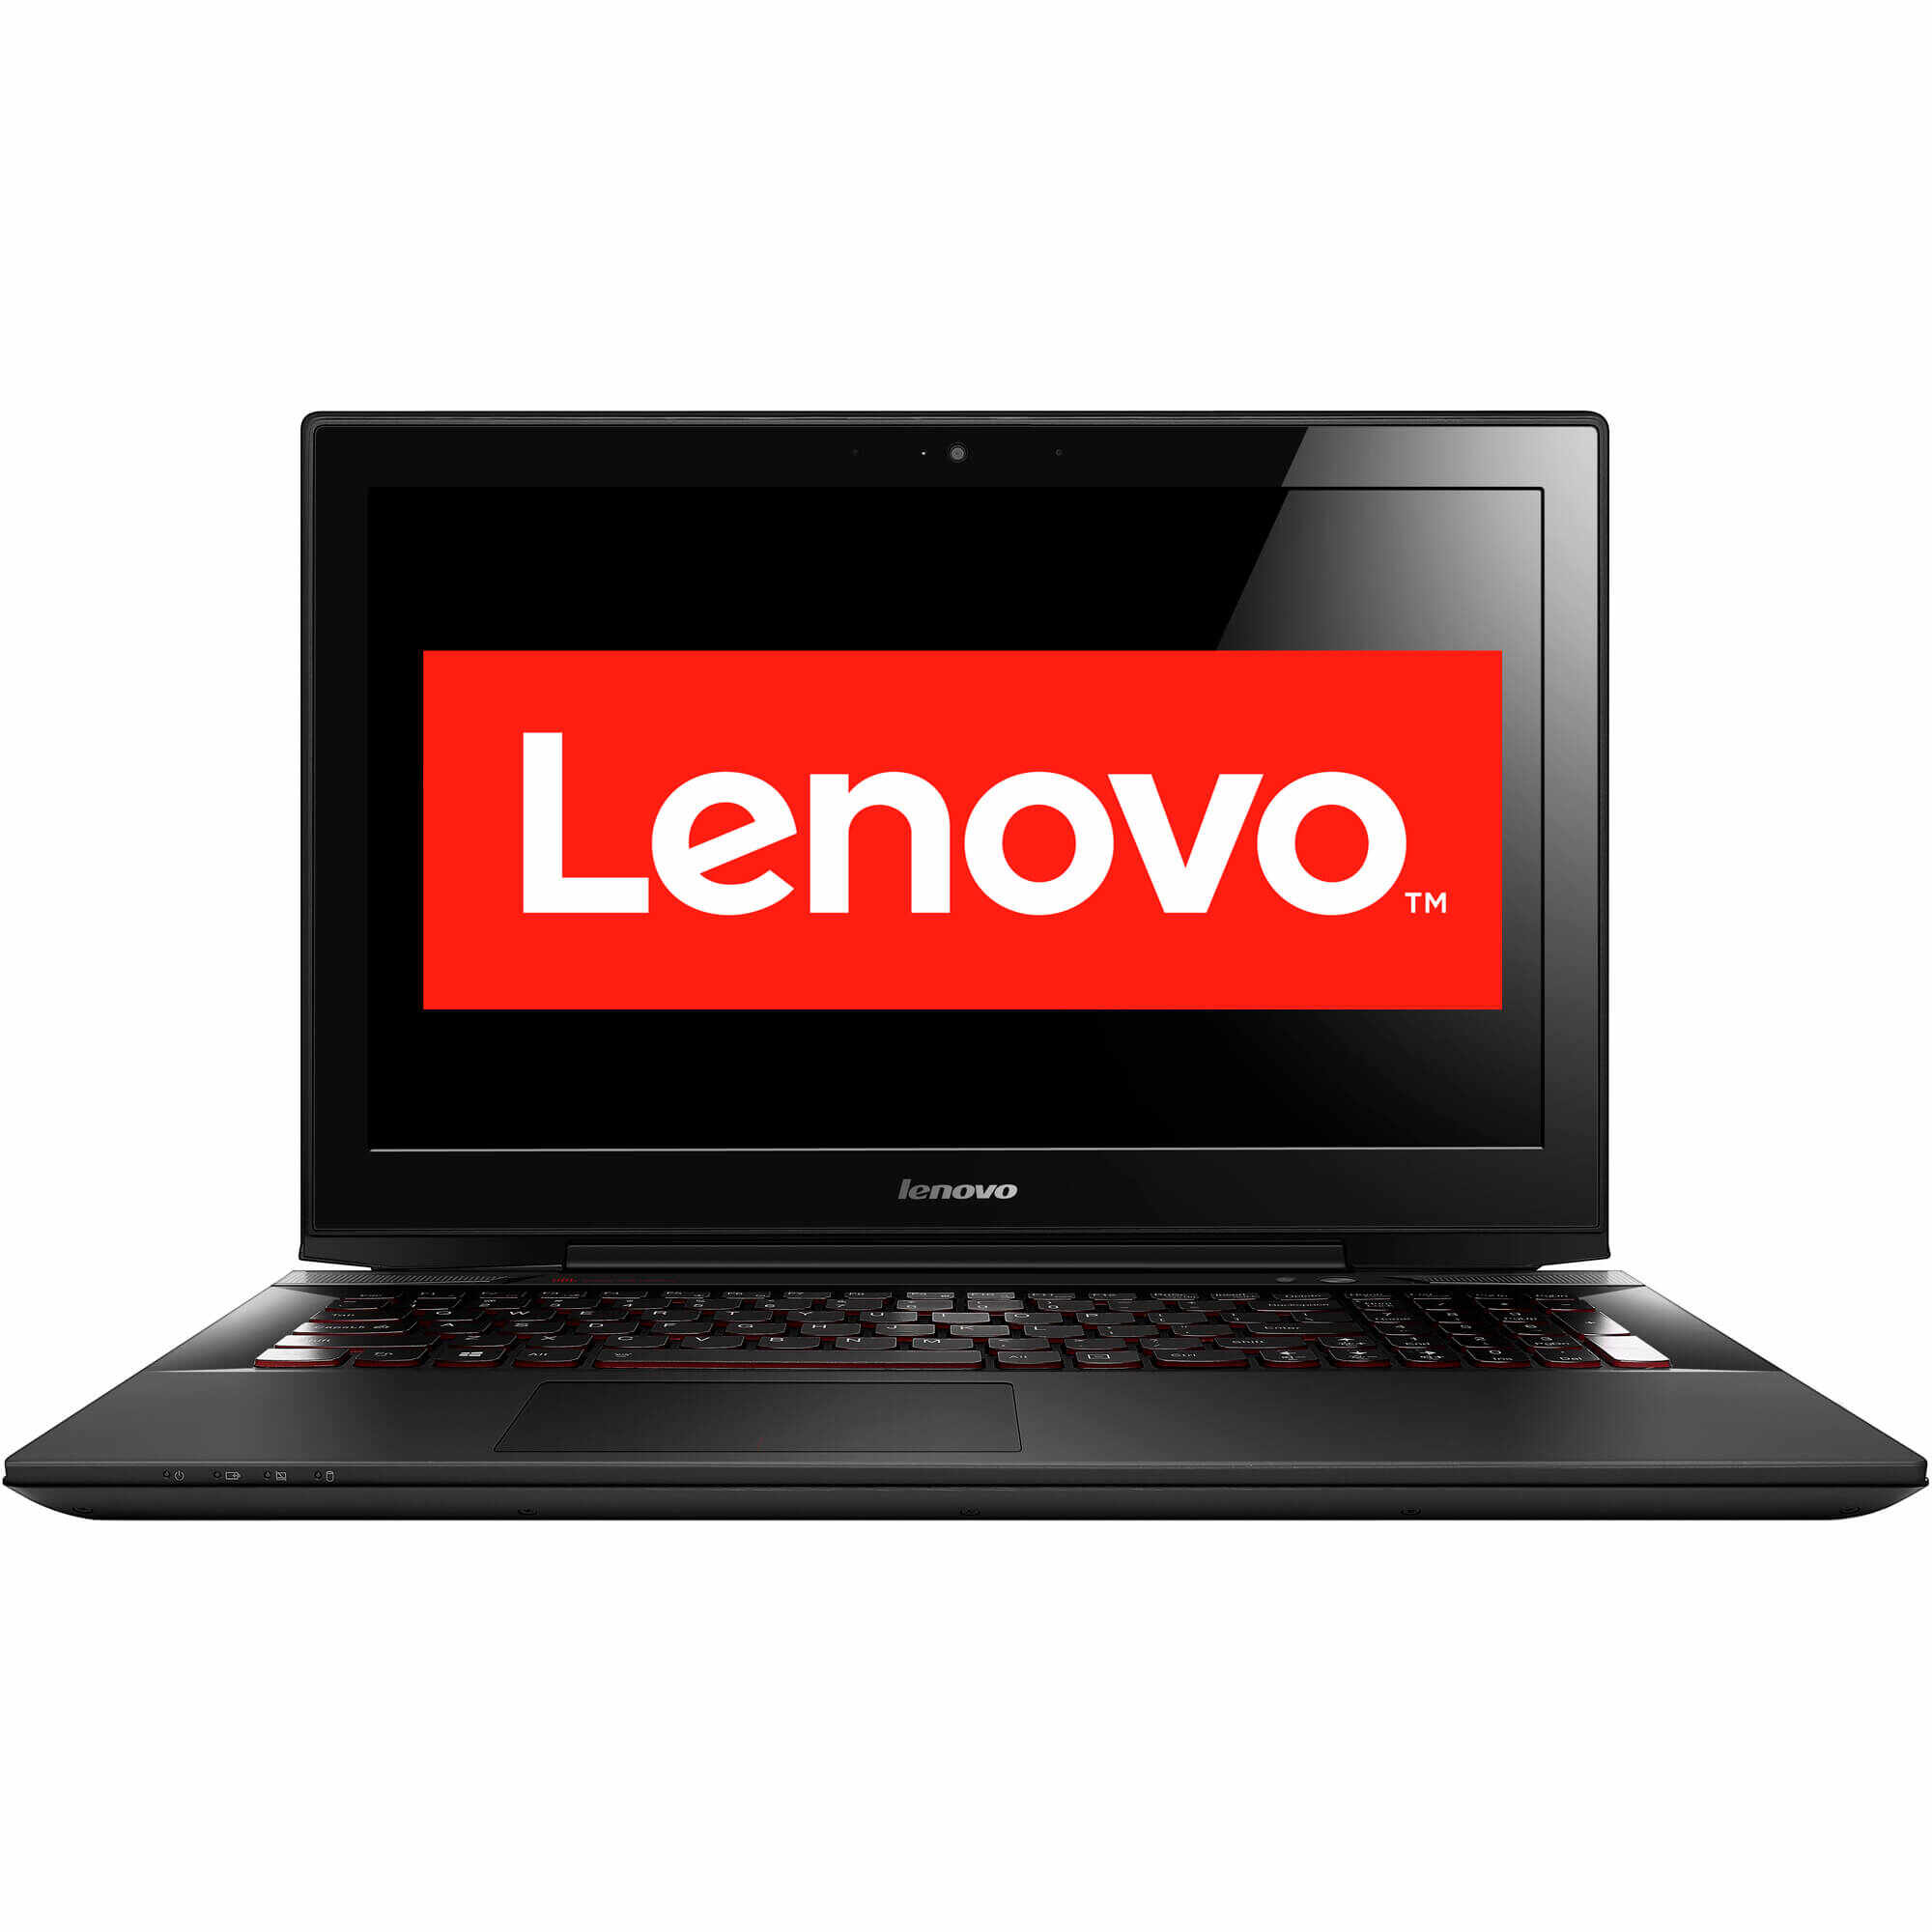 Laptop Lenovo Y5070, Intel Core i7-4720HQ, 8GB DDR3, SSHD 1TB + 8GB, nVidia GeForce GTX 960M 4GB, Free DOS